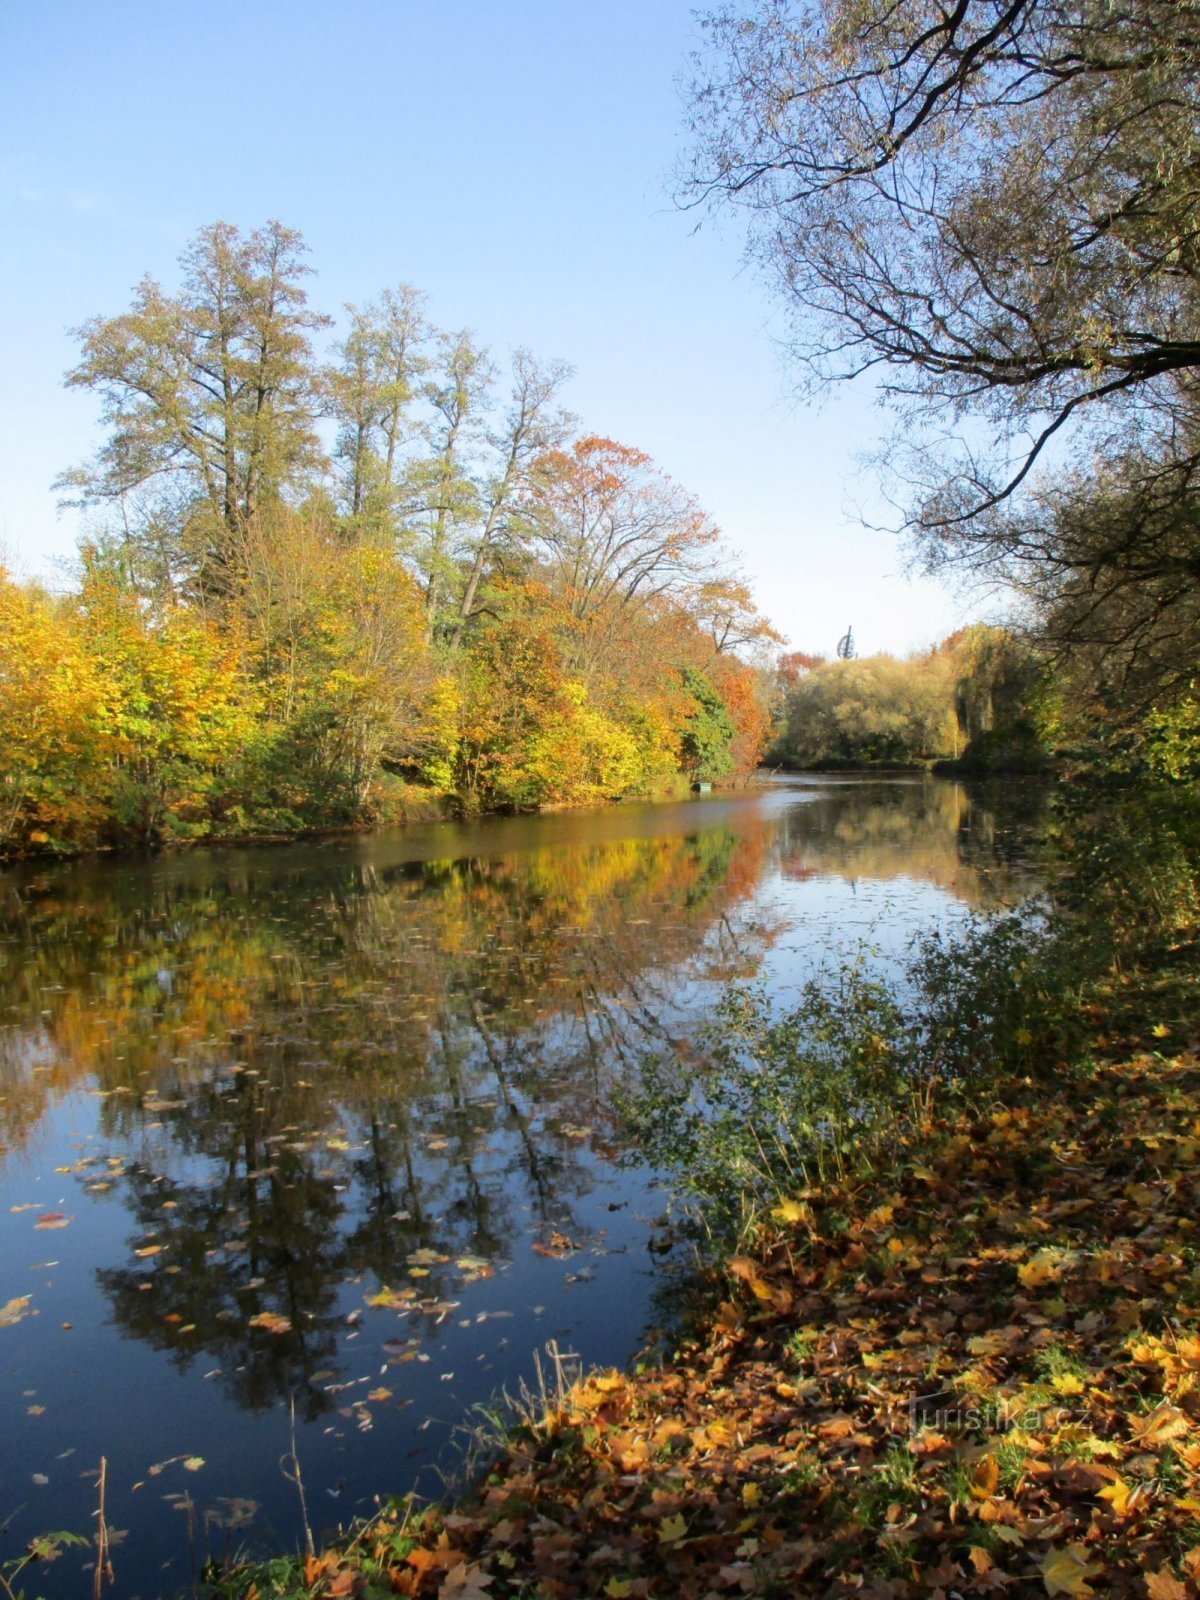 River Orlice i sommerbiografen (Hradec Králové, 31.10.2019/XNUMX/XNUMX)